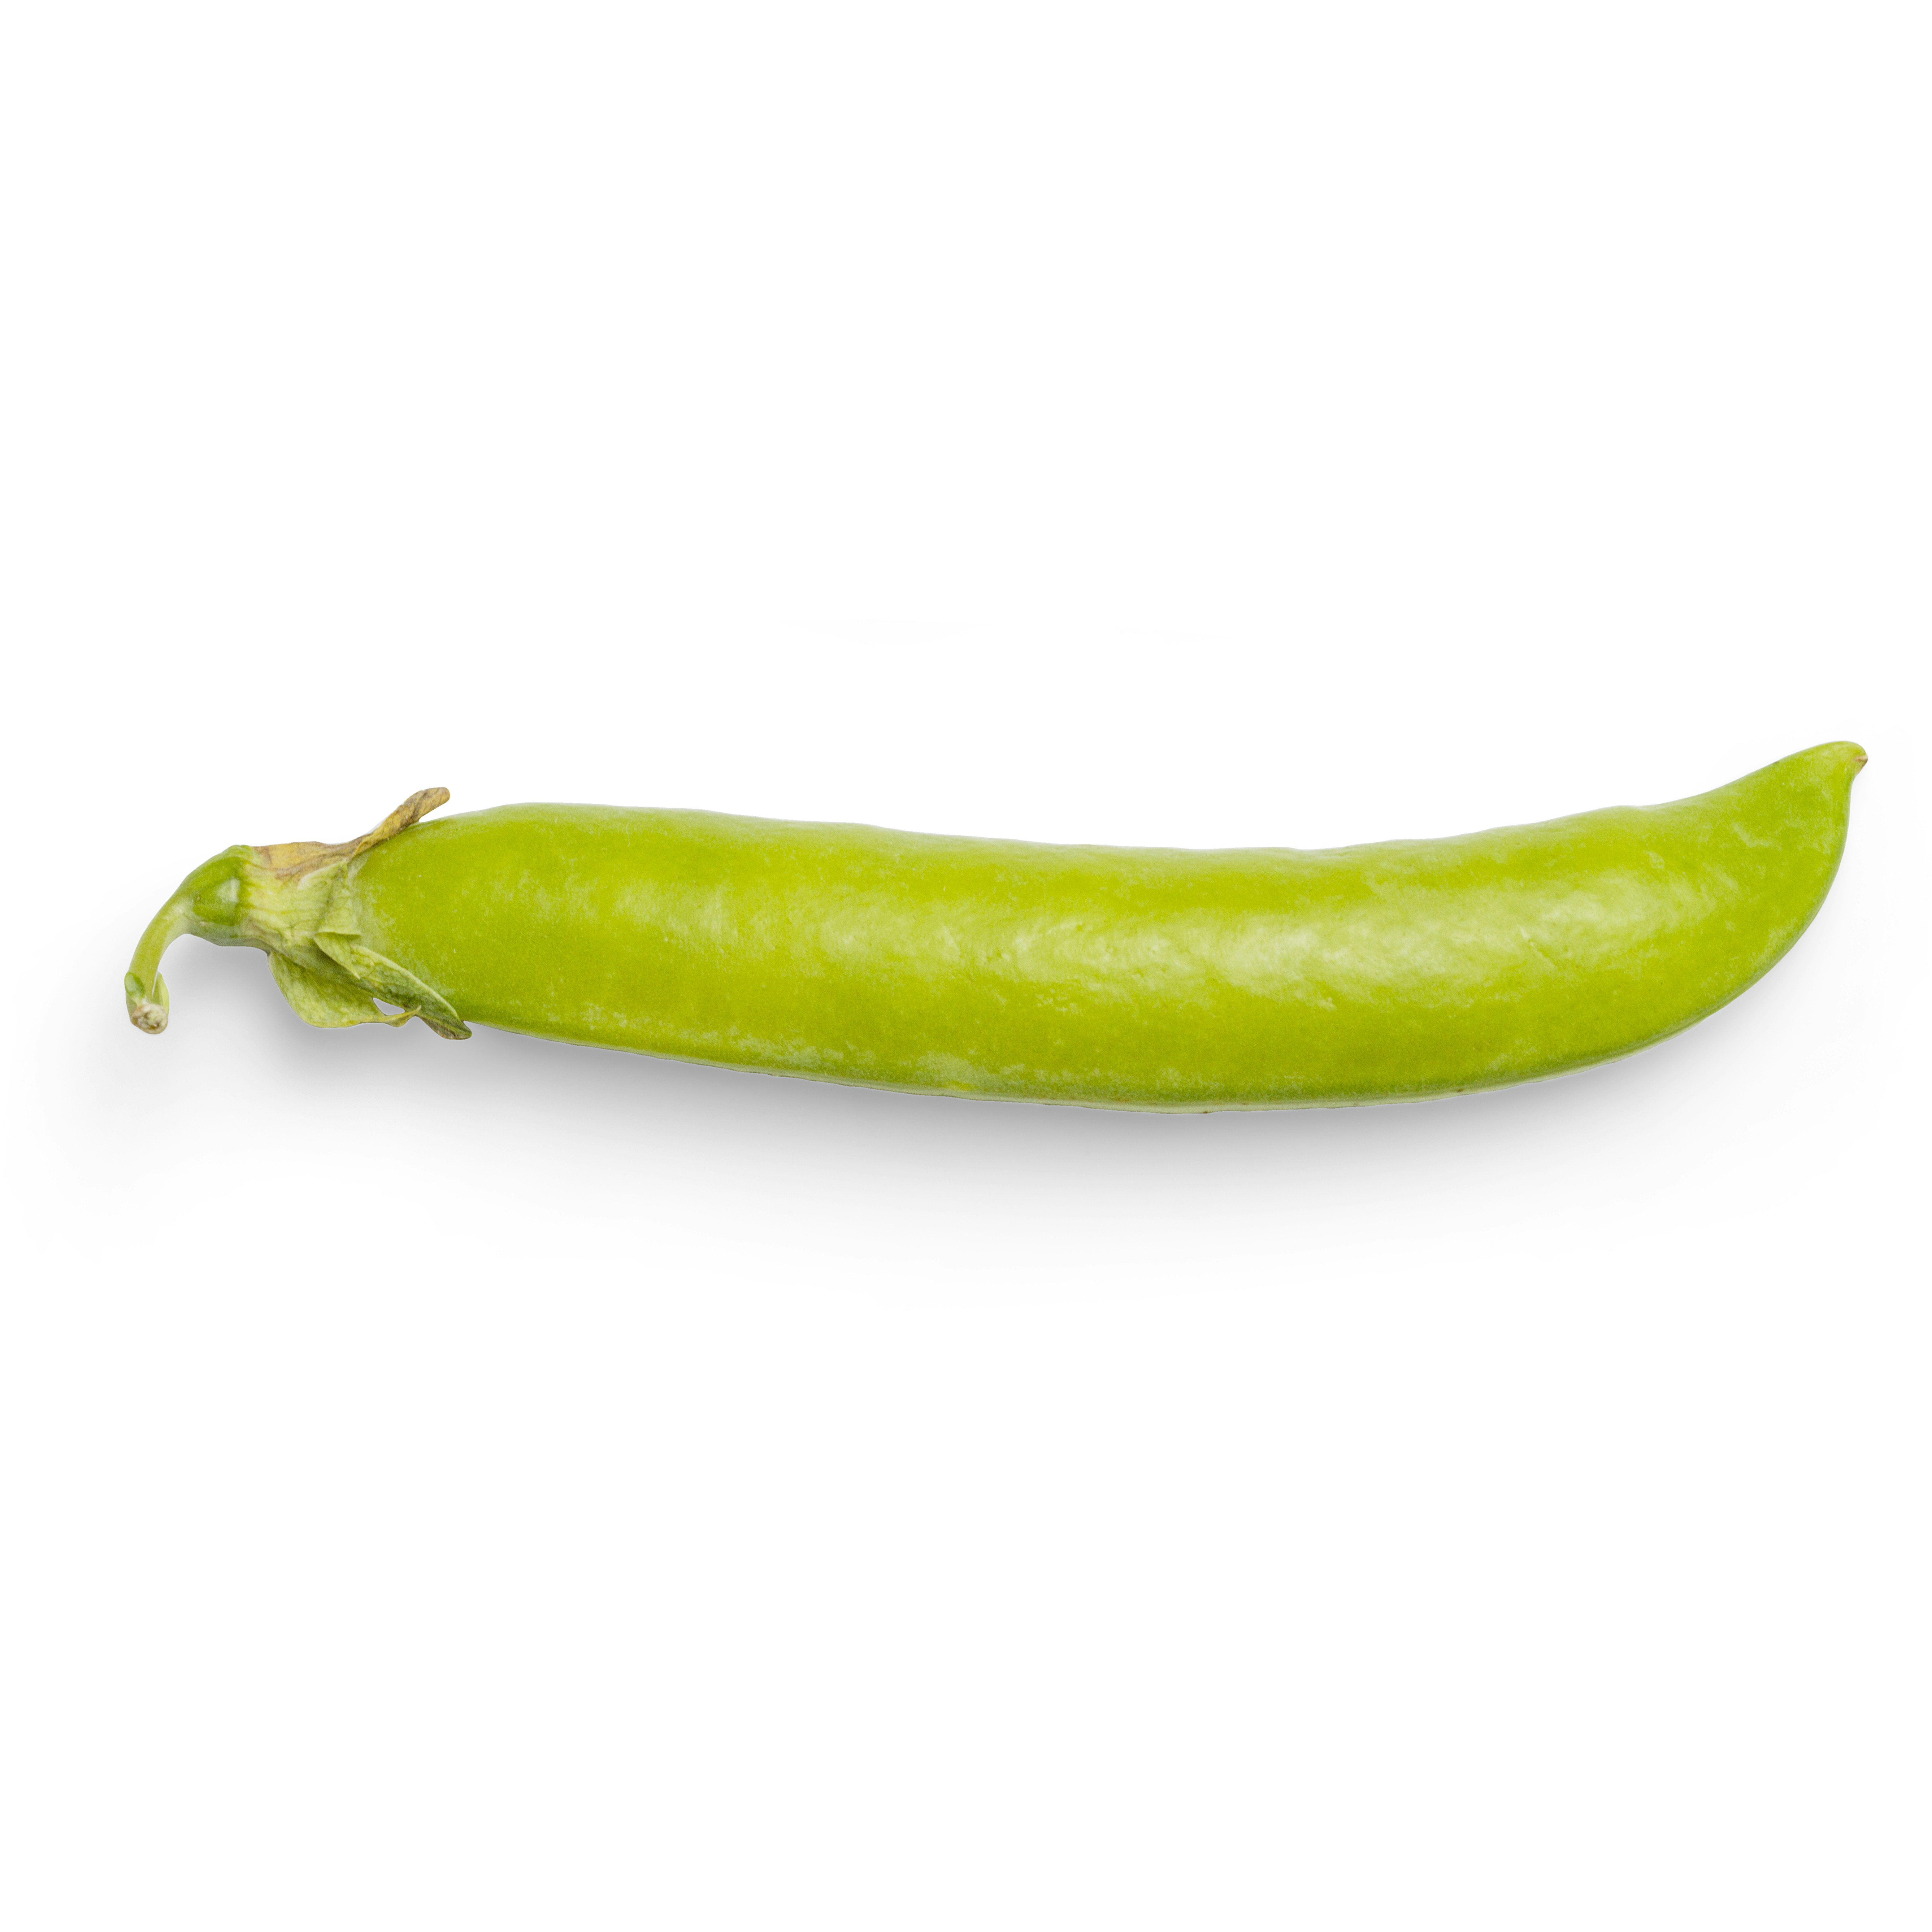 green chili on white background